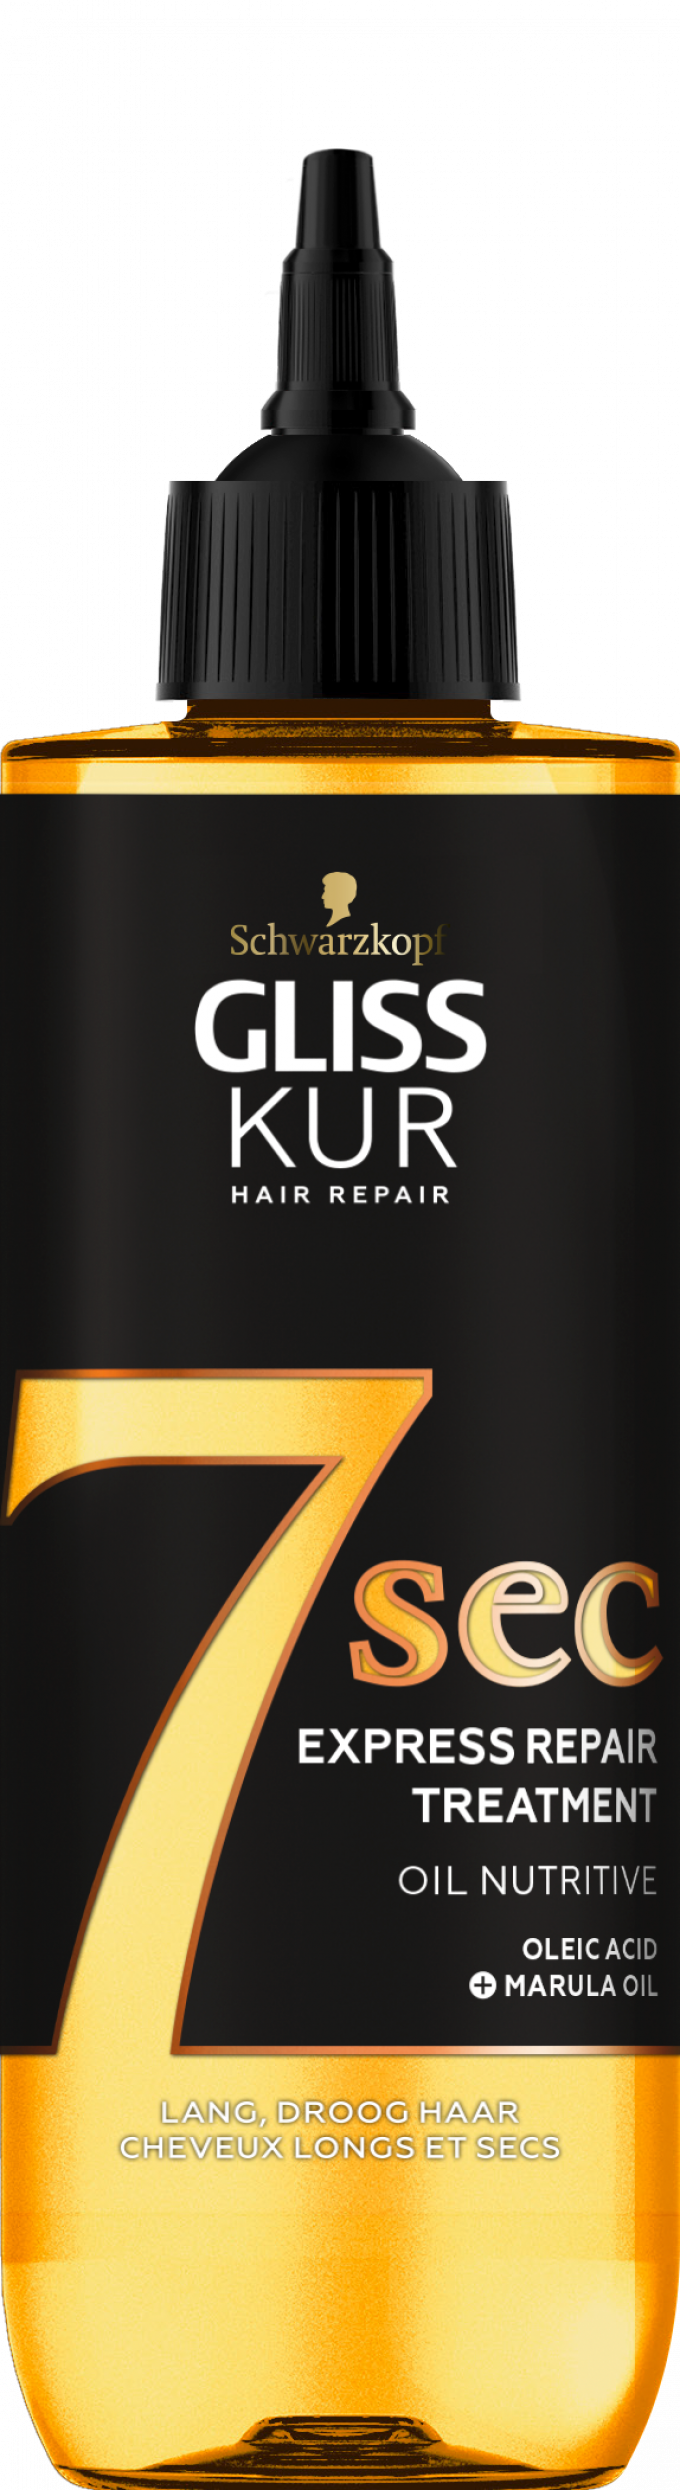 Gliss Kur 7 seconds Treatment Oil nutritive